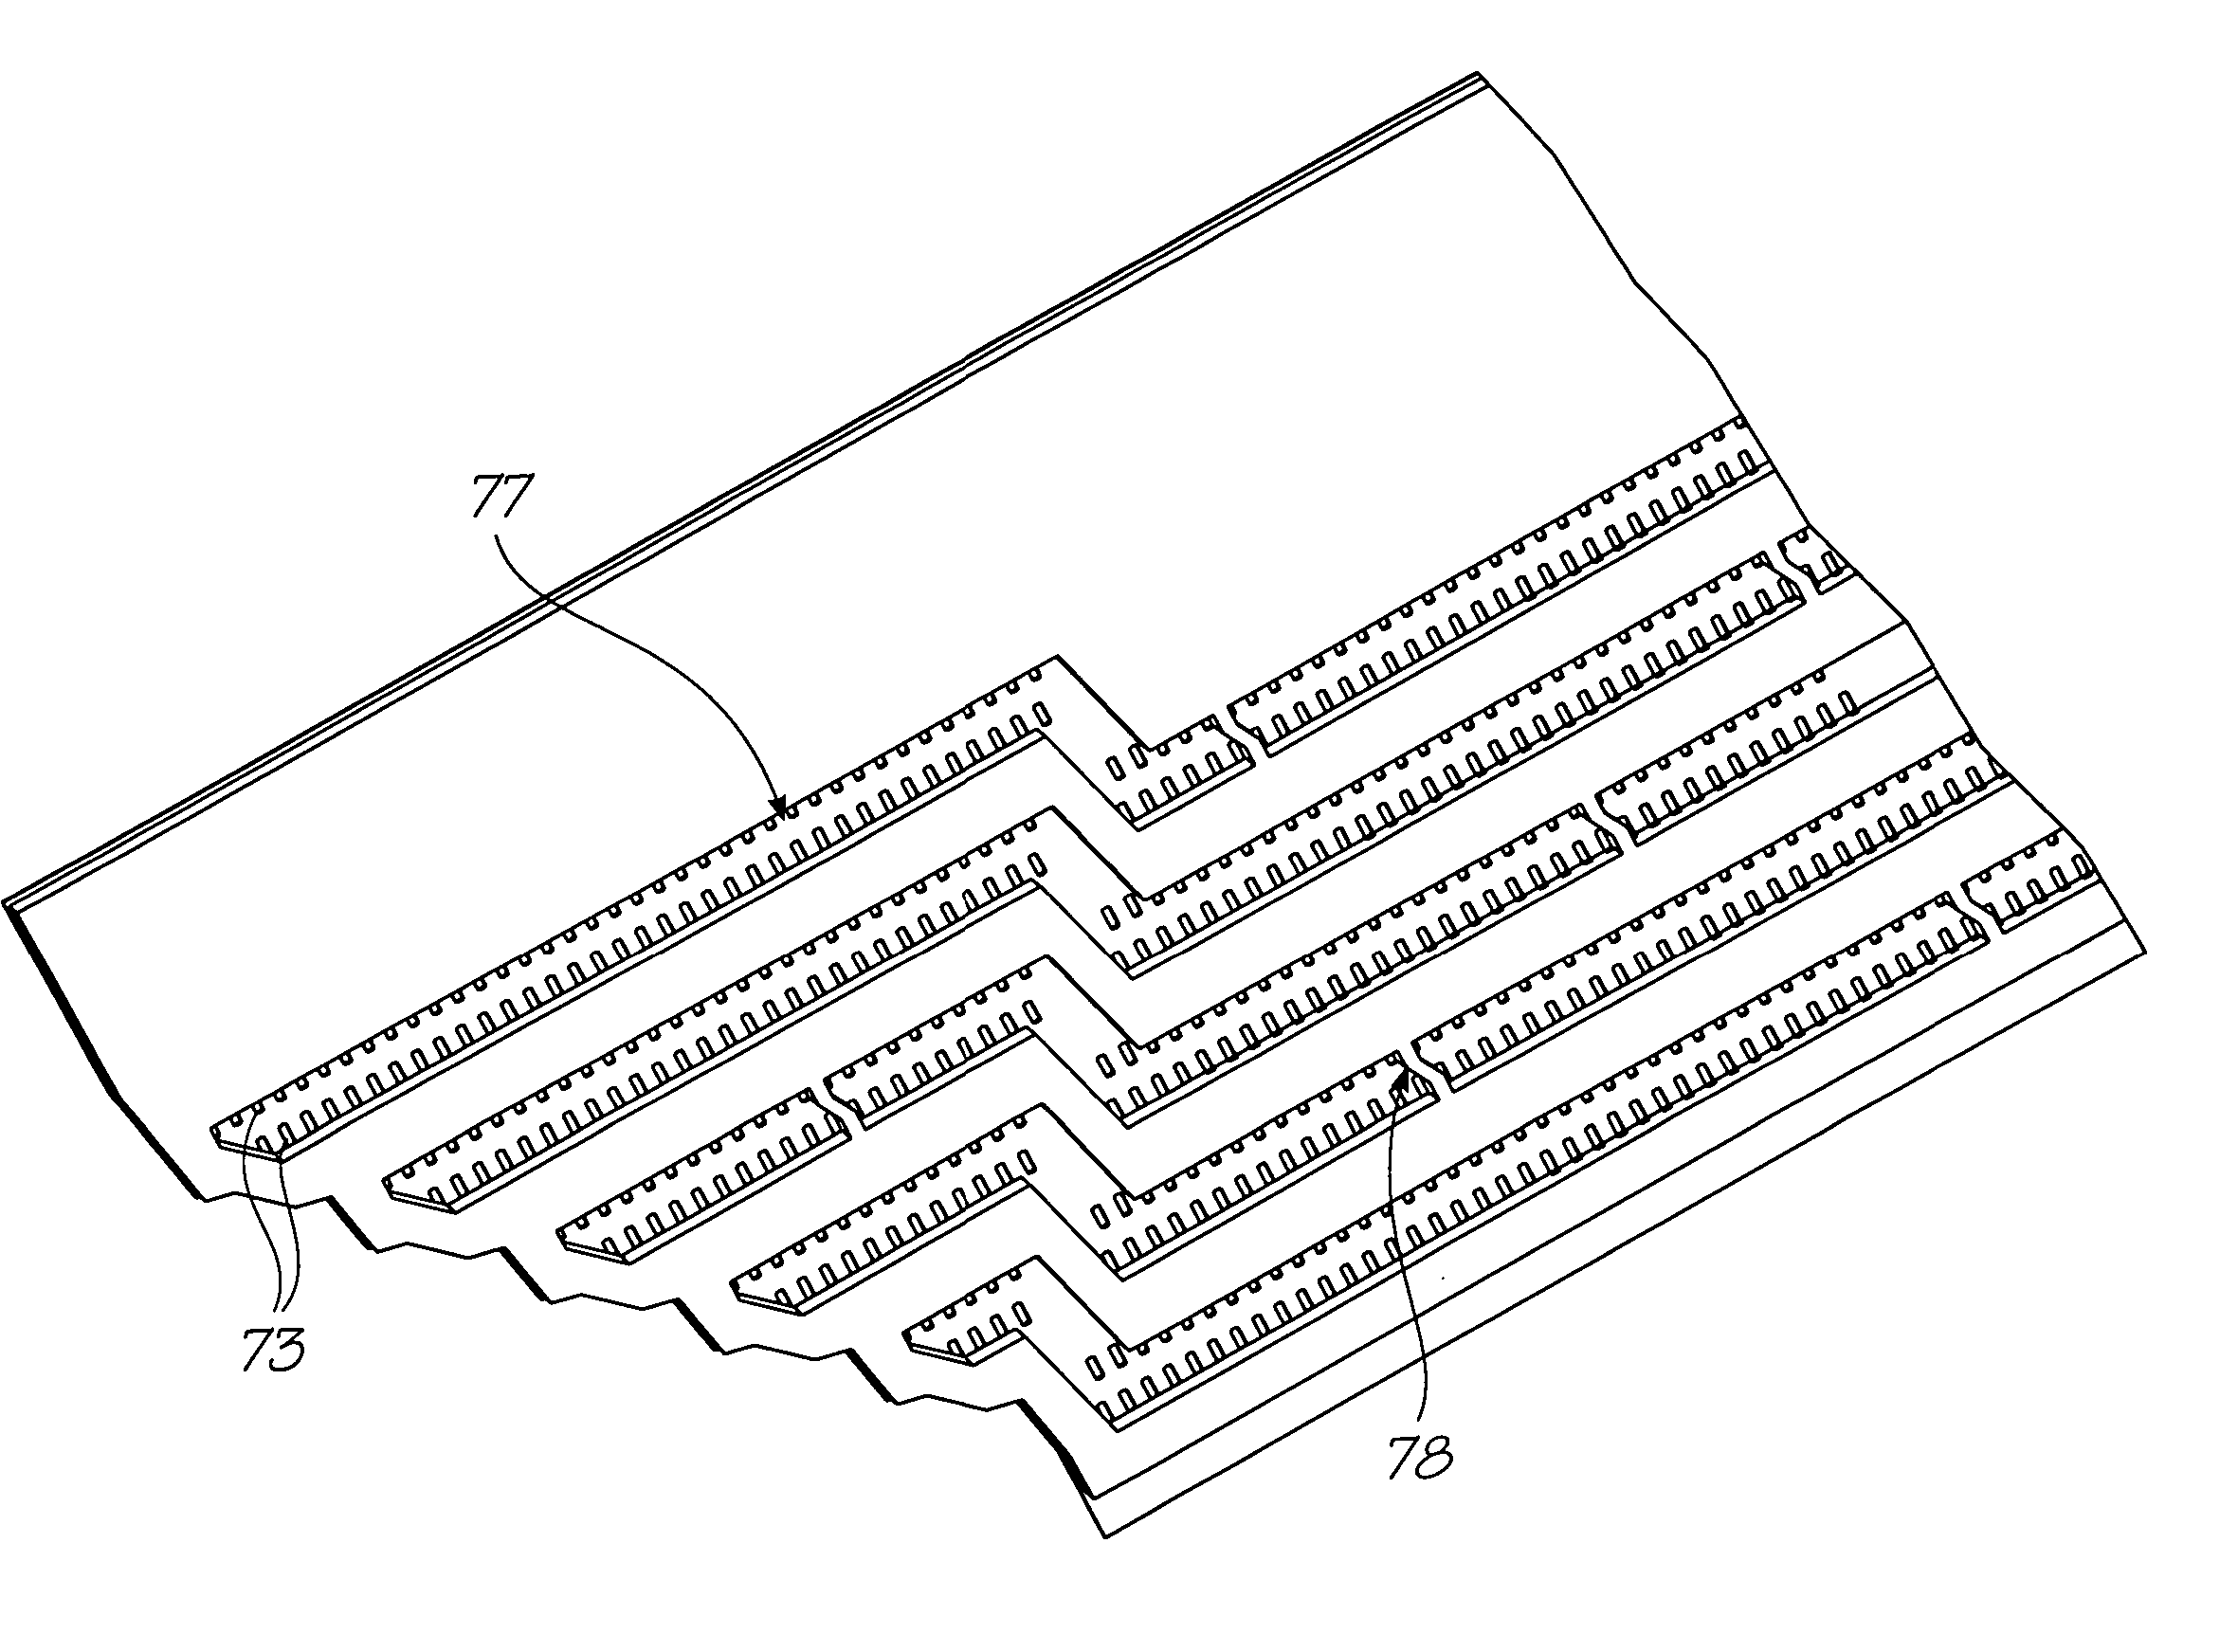 Printhead chip having longitudinal ink supply channels